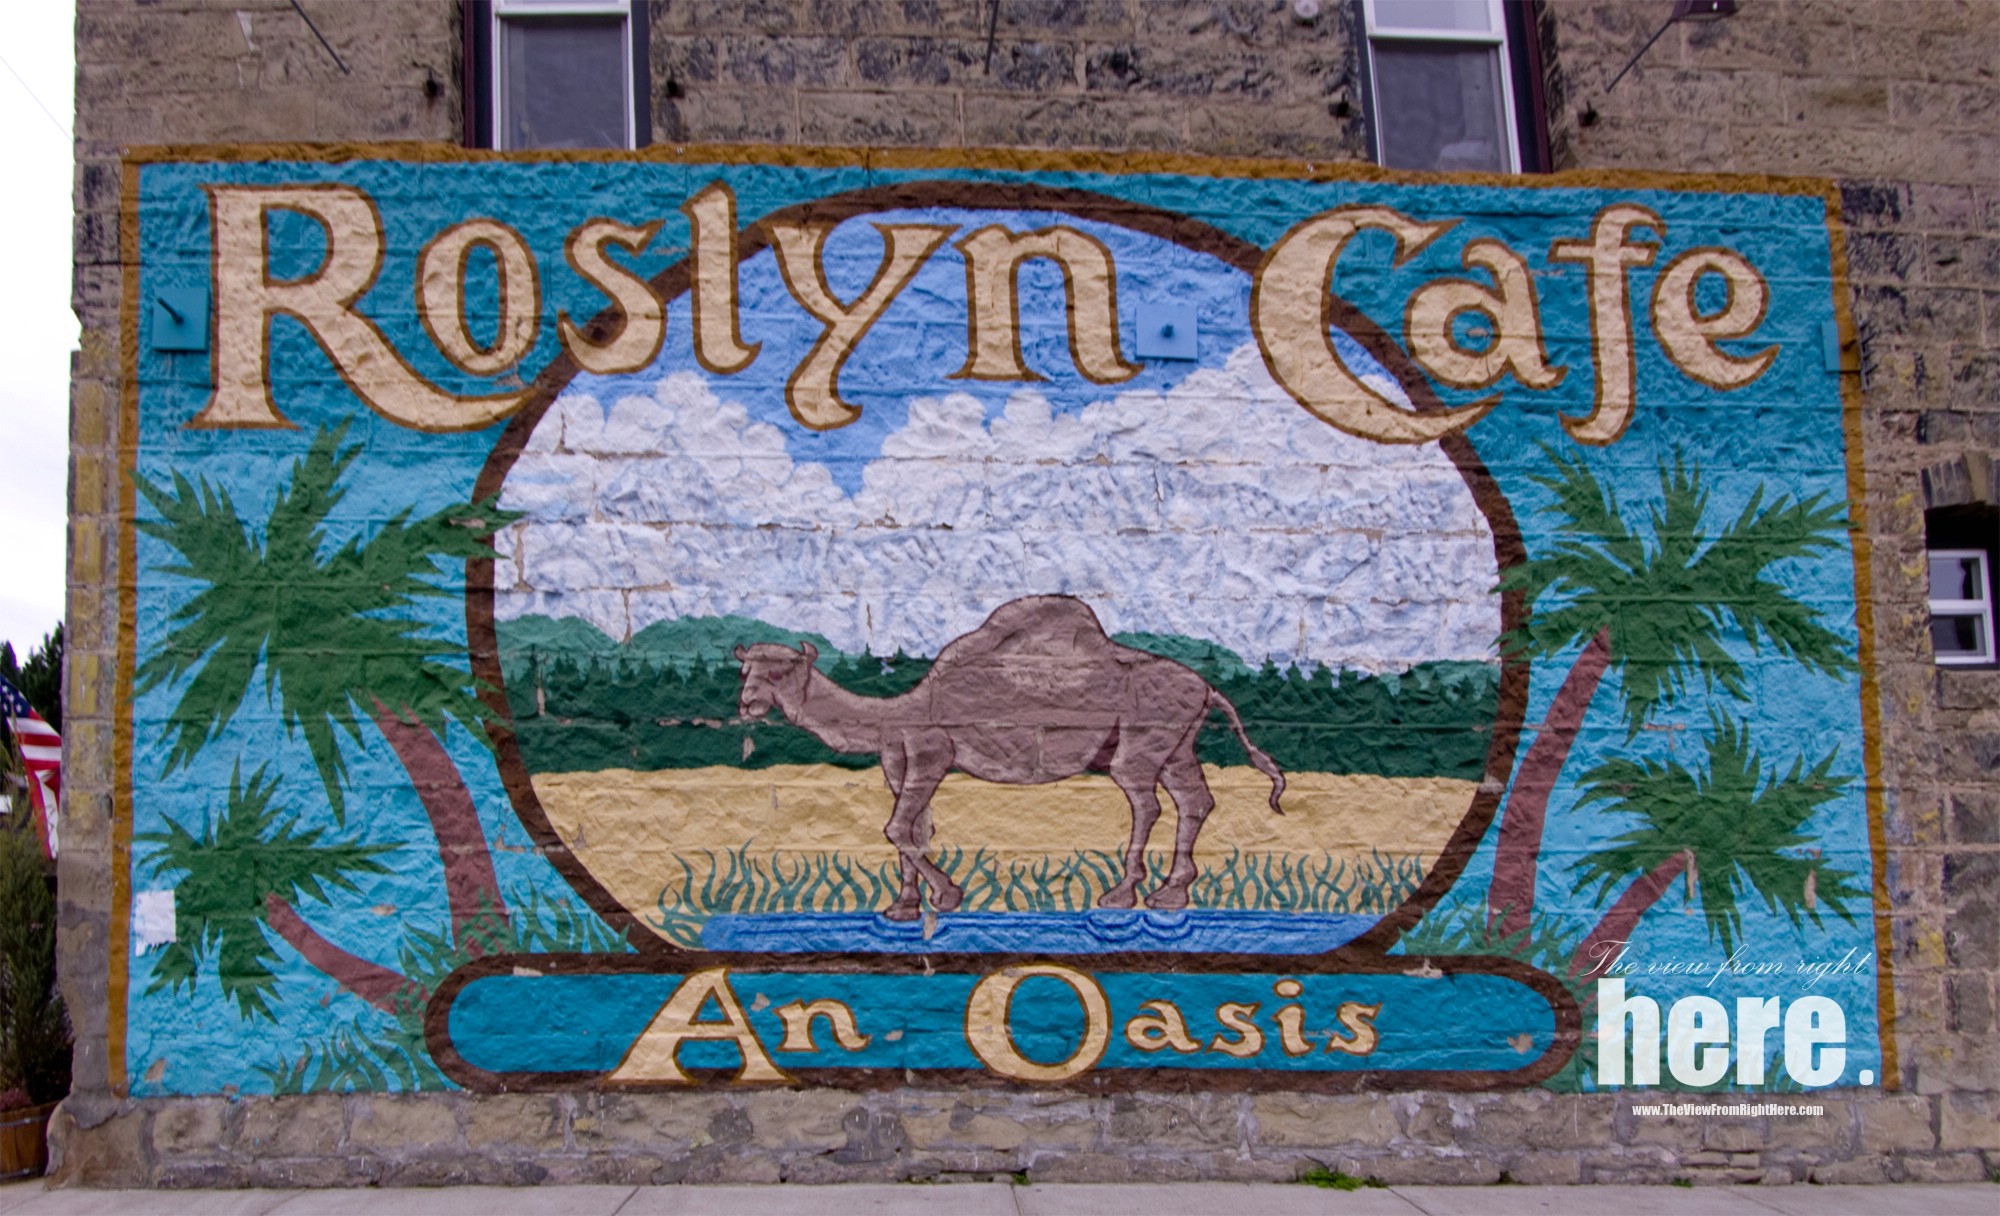 Northern Exposure – Roslyn Cafe